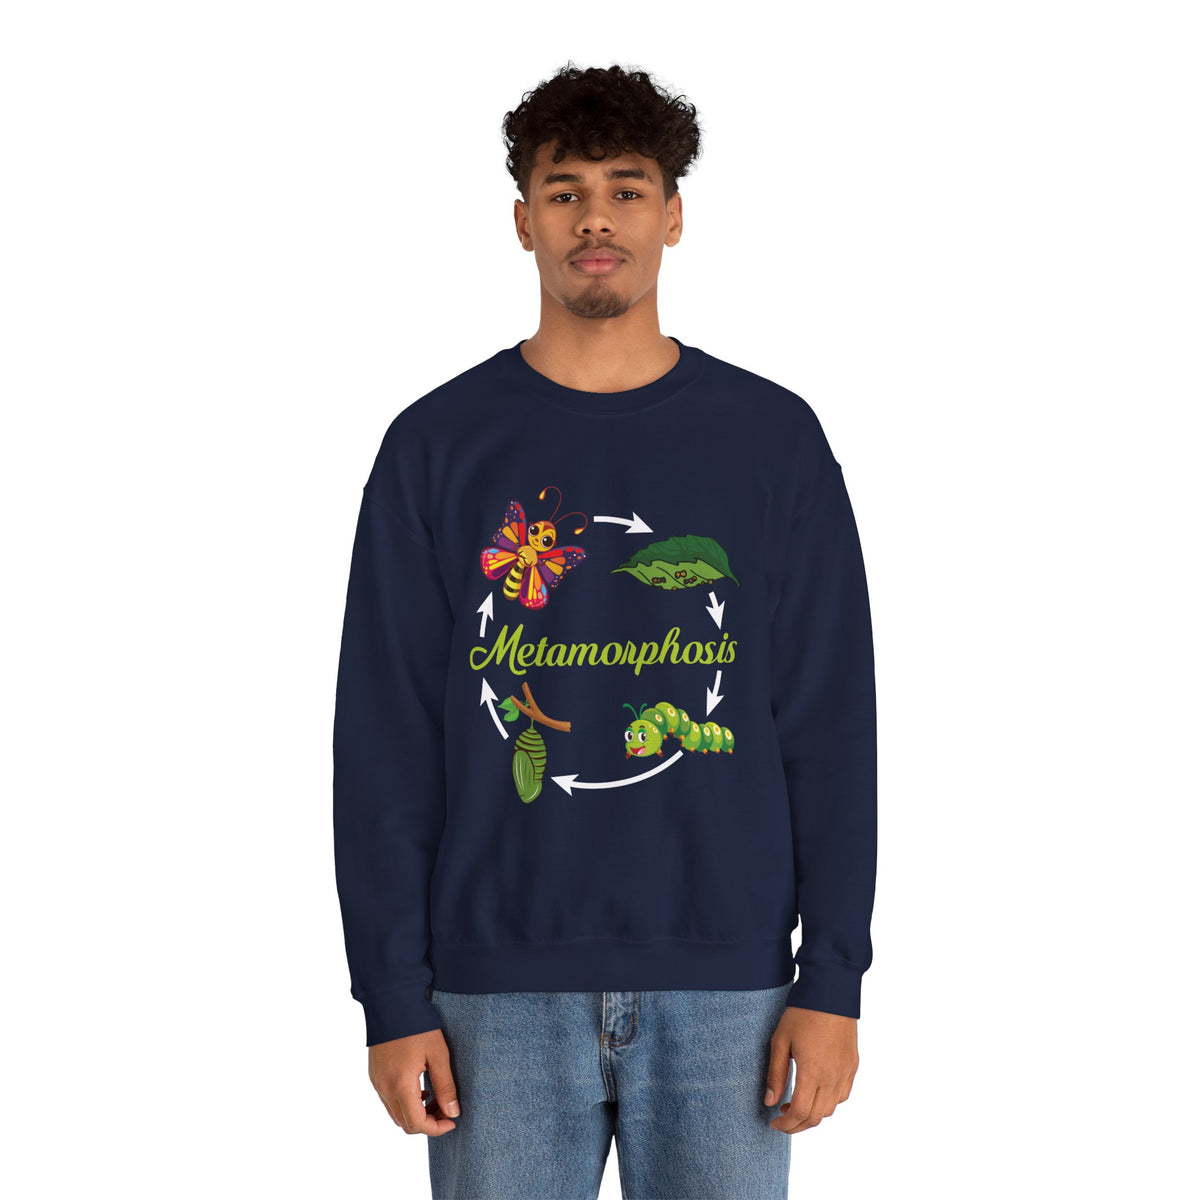 Metamorphosis Life Cycle Biology Shirts | Science Teacher Gifts   | Unisex Crewneck Sweatshirt